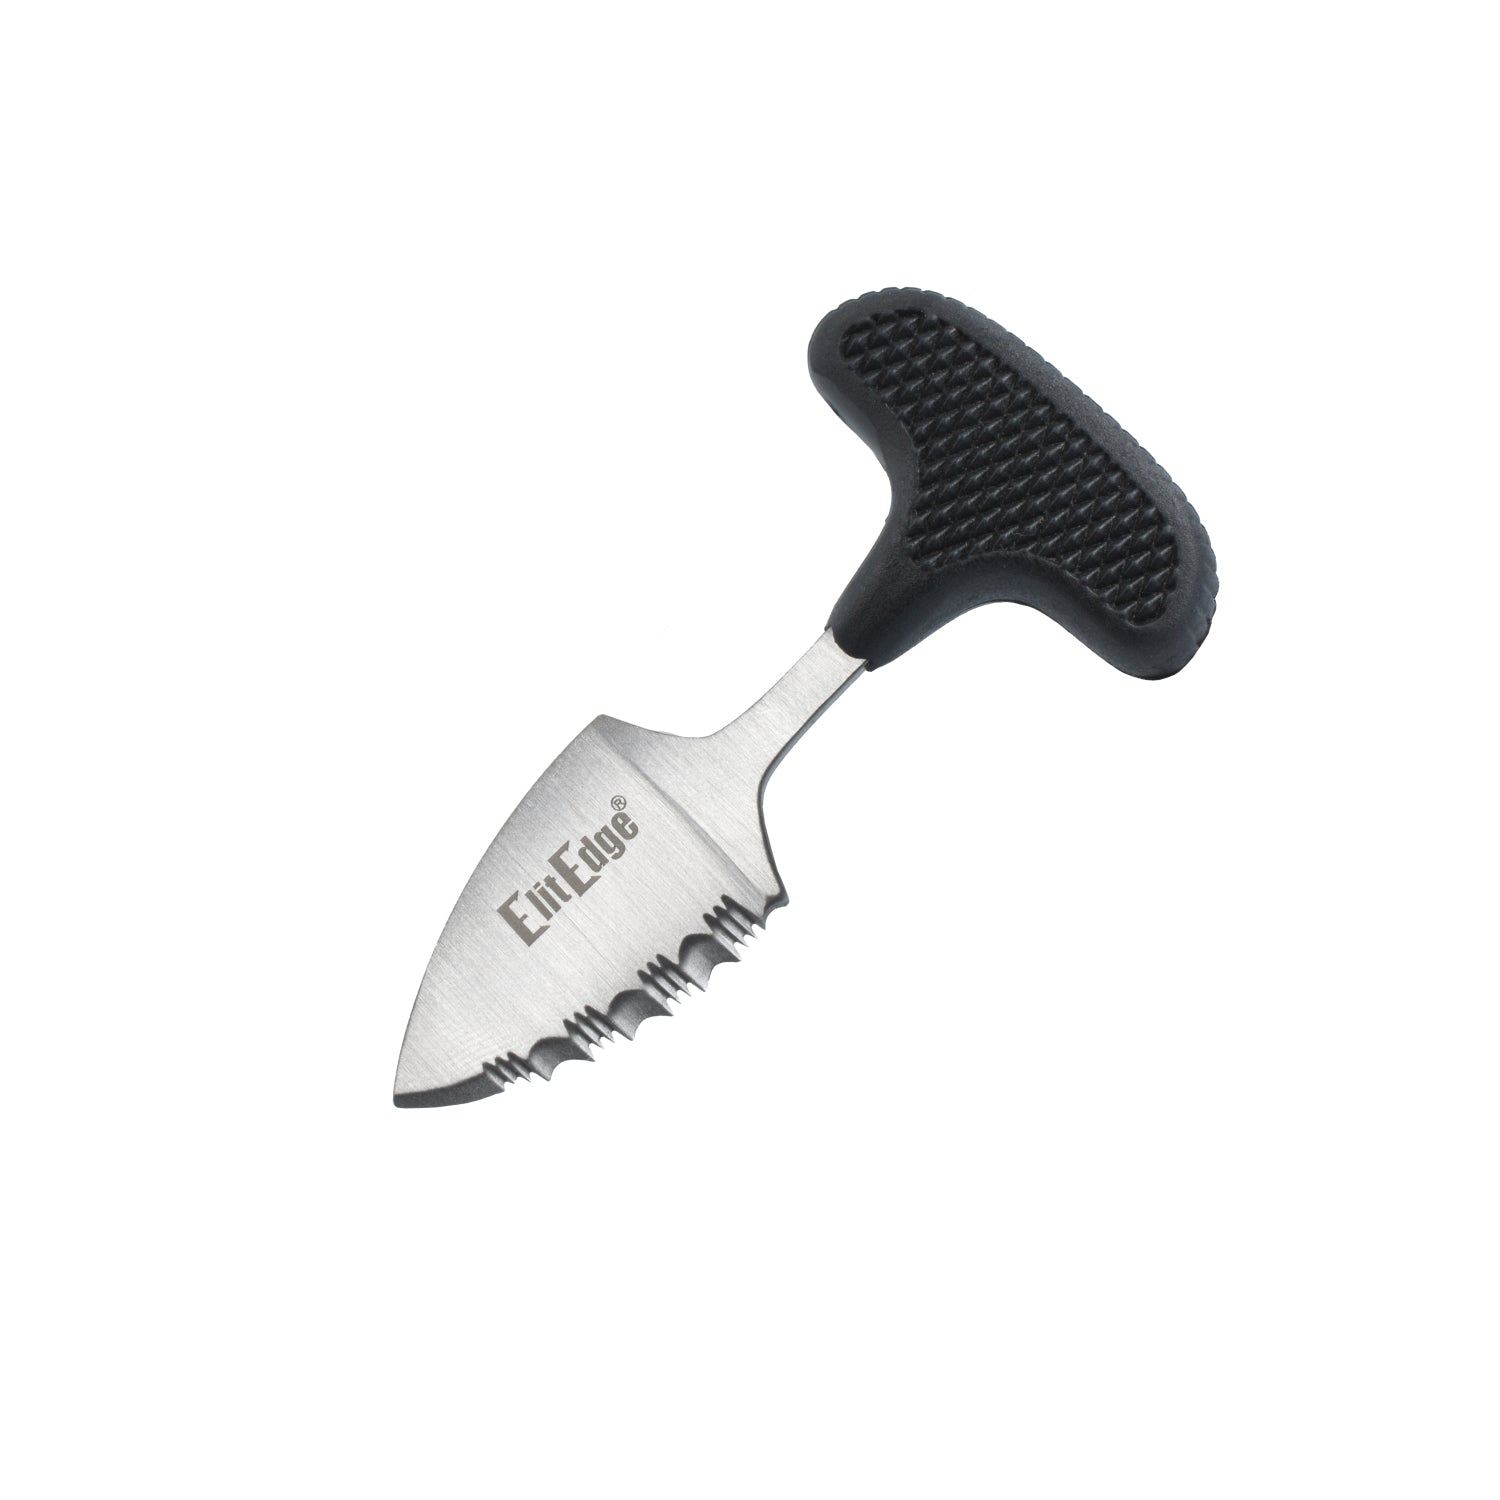 3.25-Inch Push Dagger with ABS Sheath